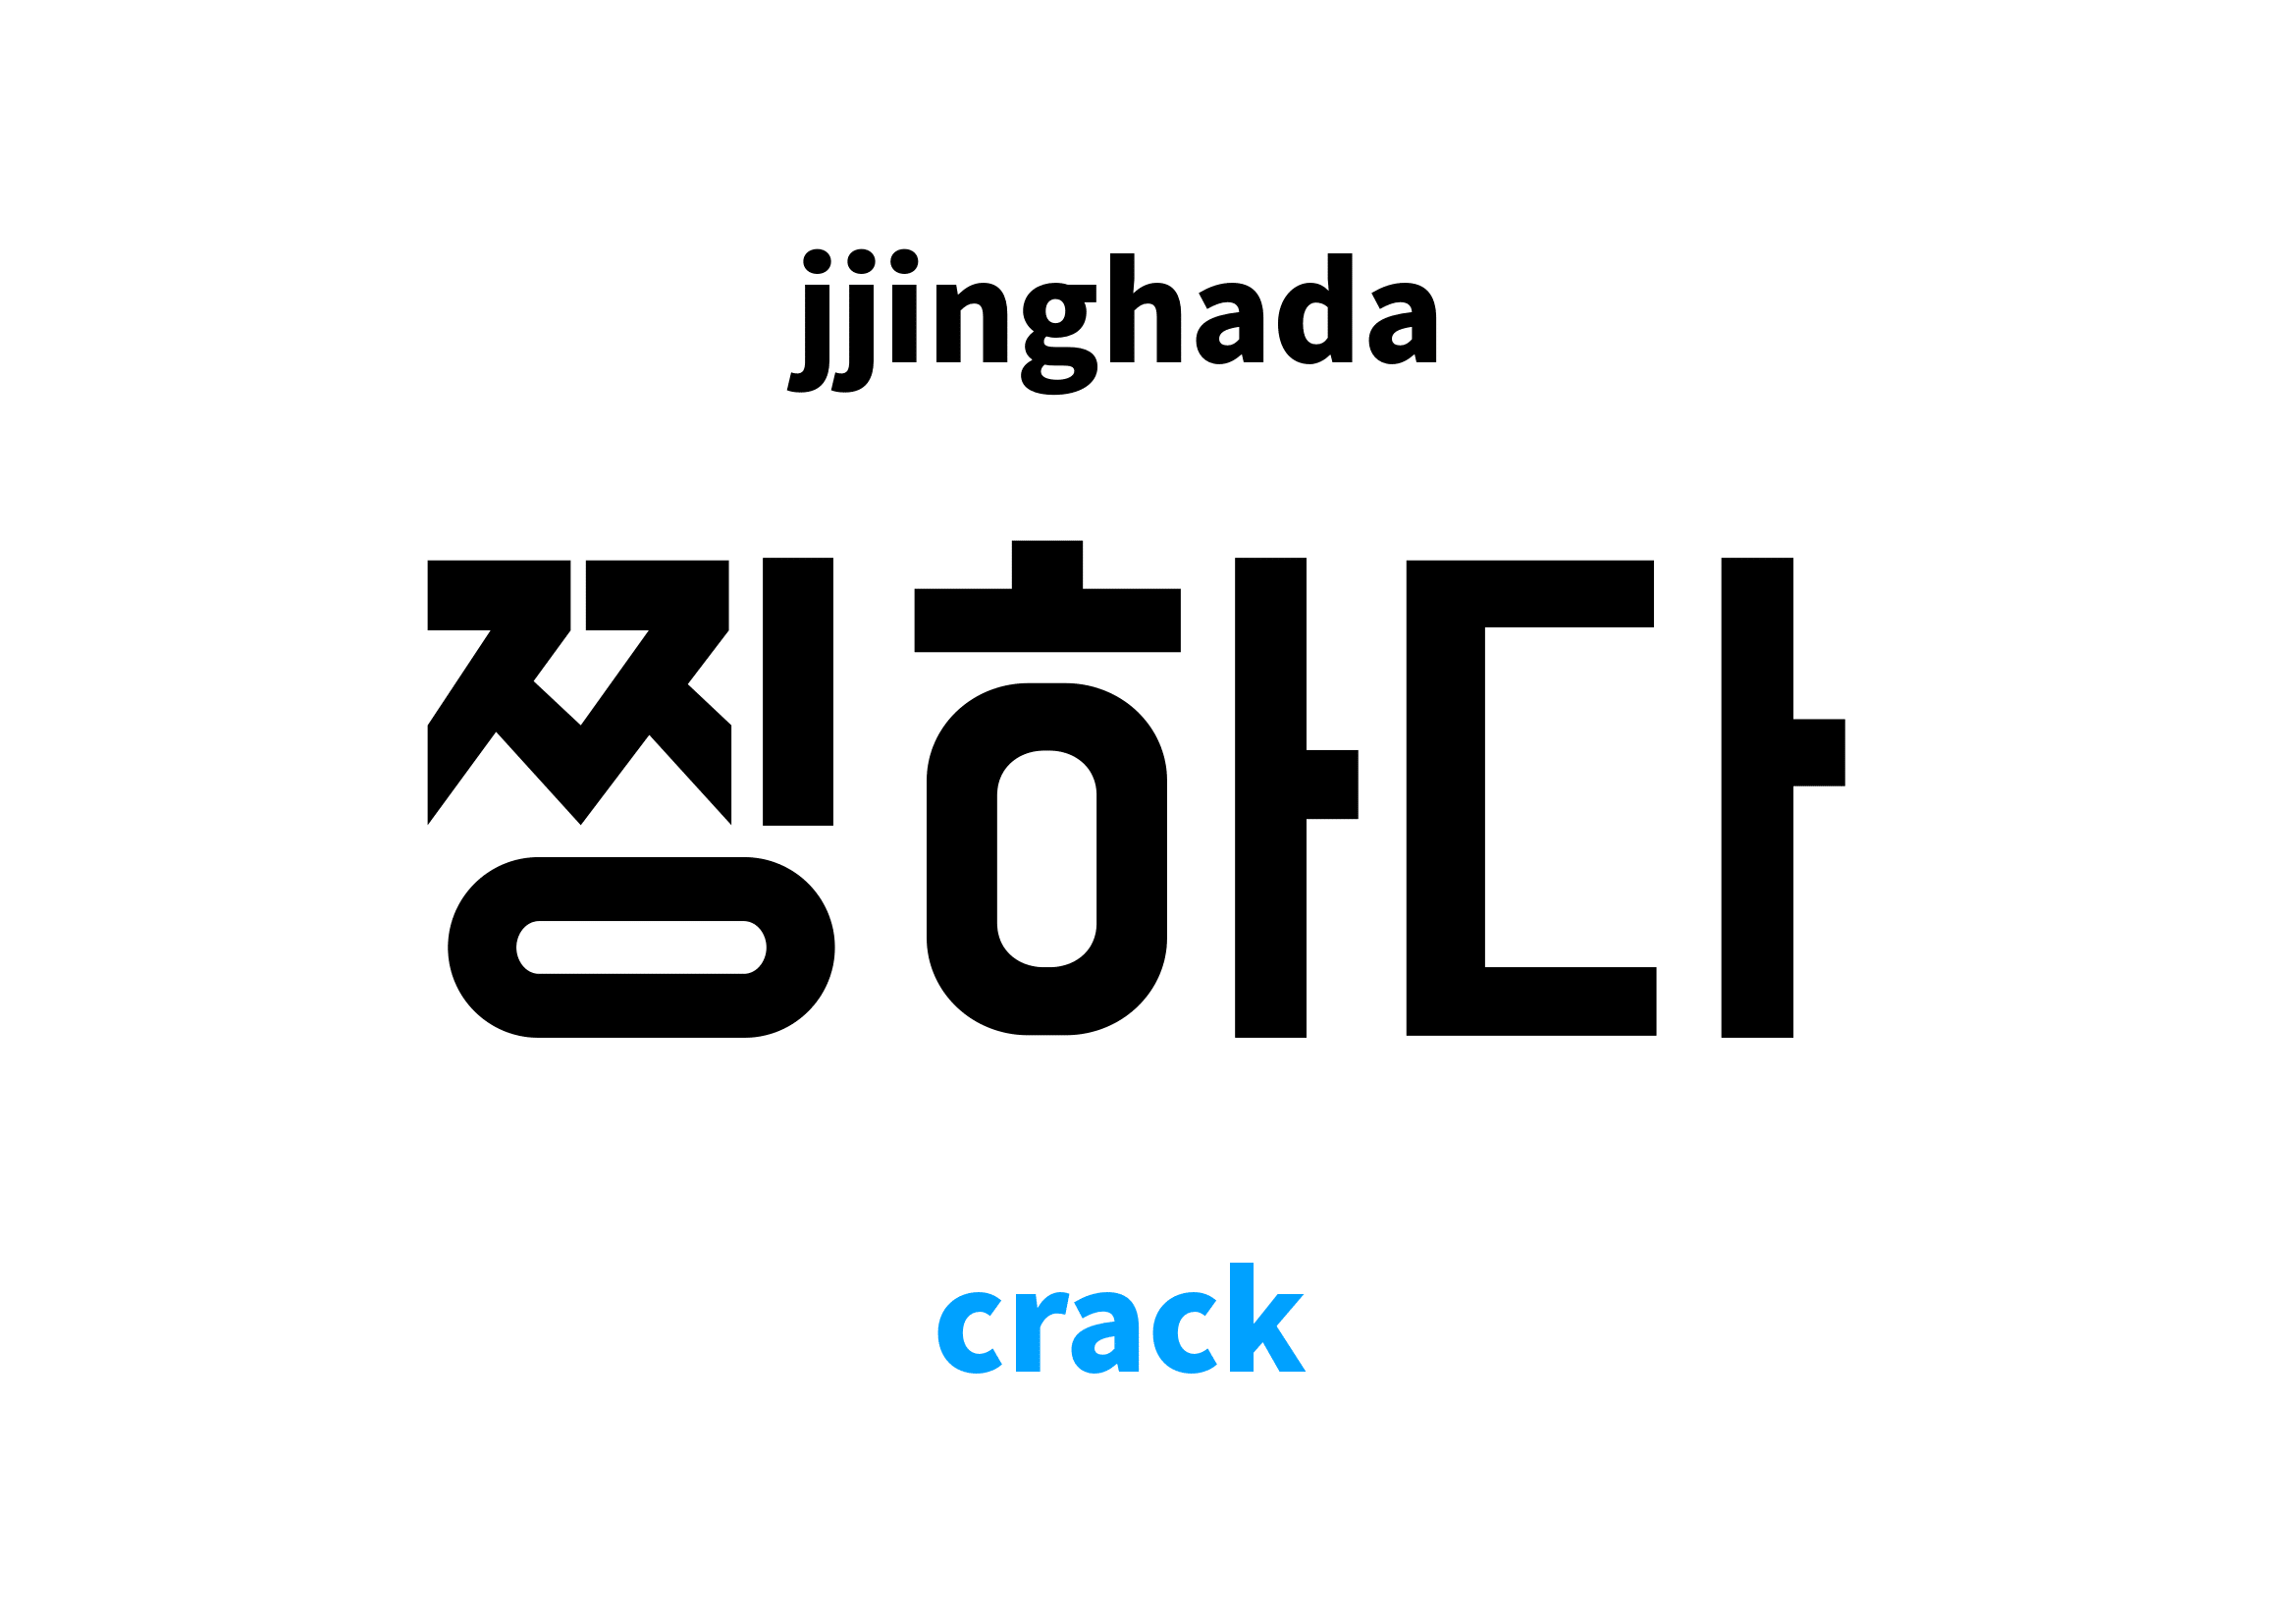 crack in Korean, 찡하다 meaning